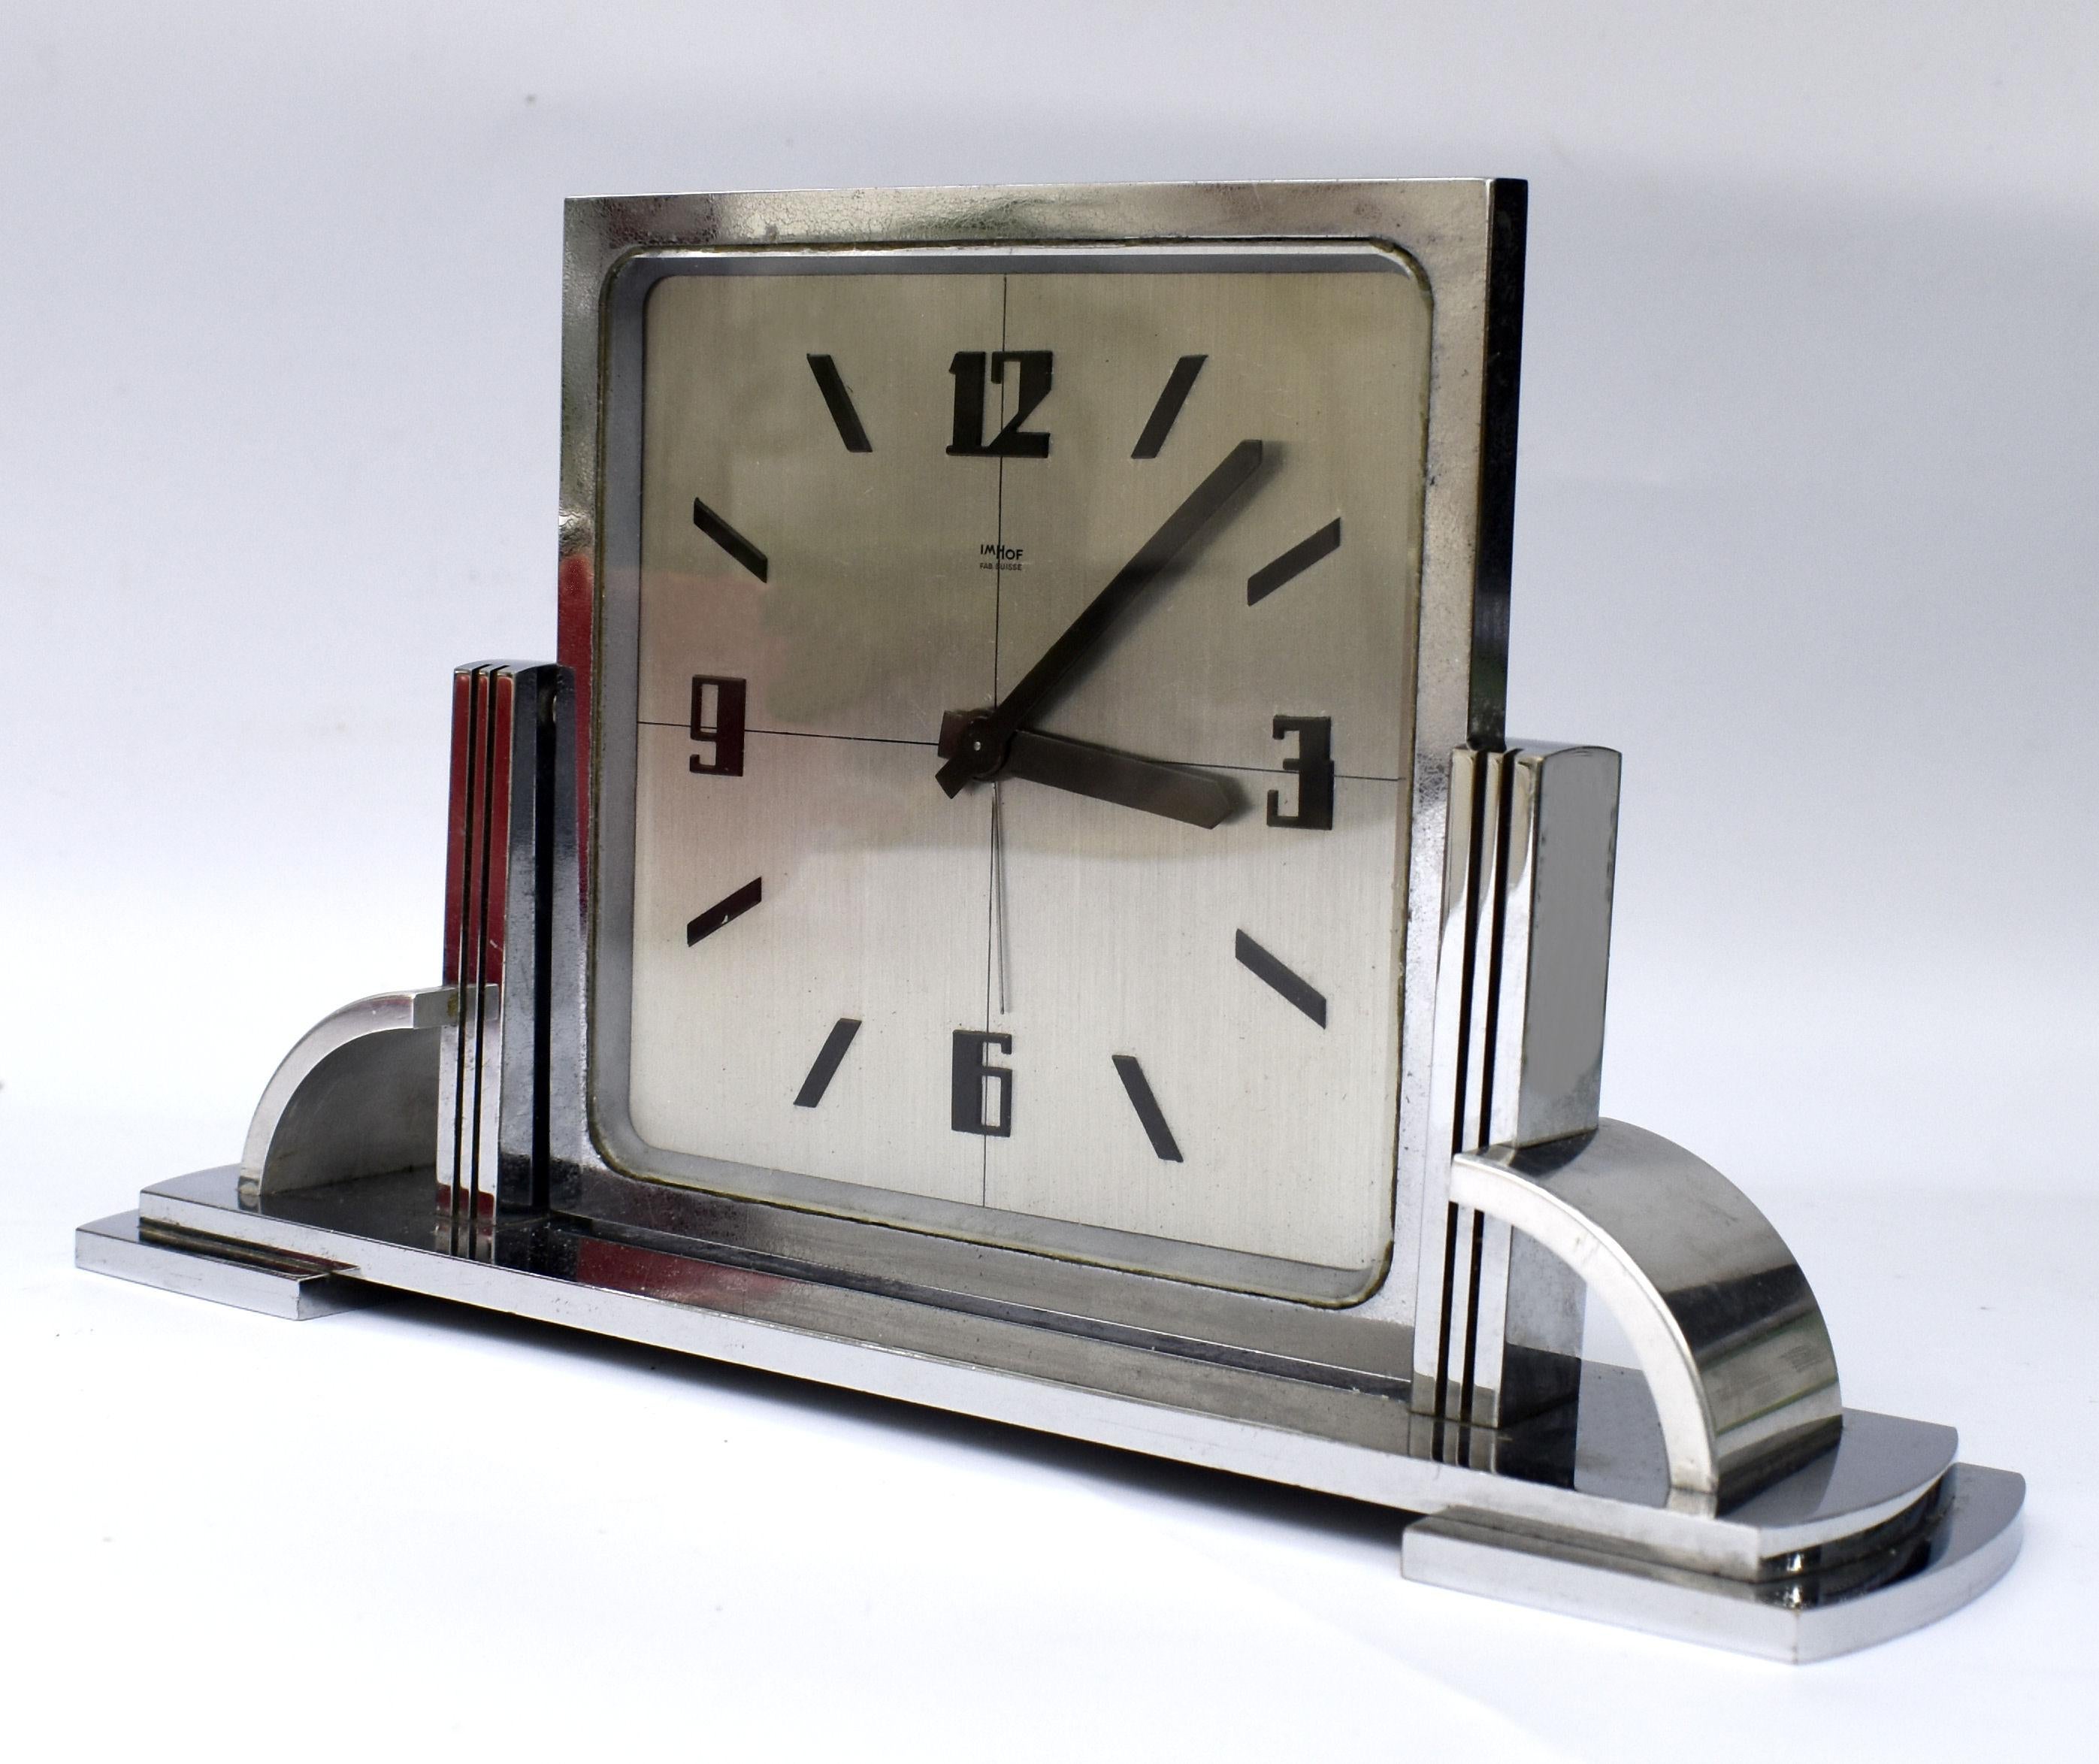 20th Century Art Deco Modernist Clock By Imhof, Swiss, c1930